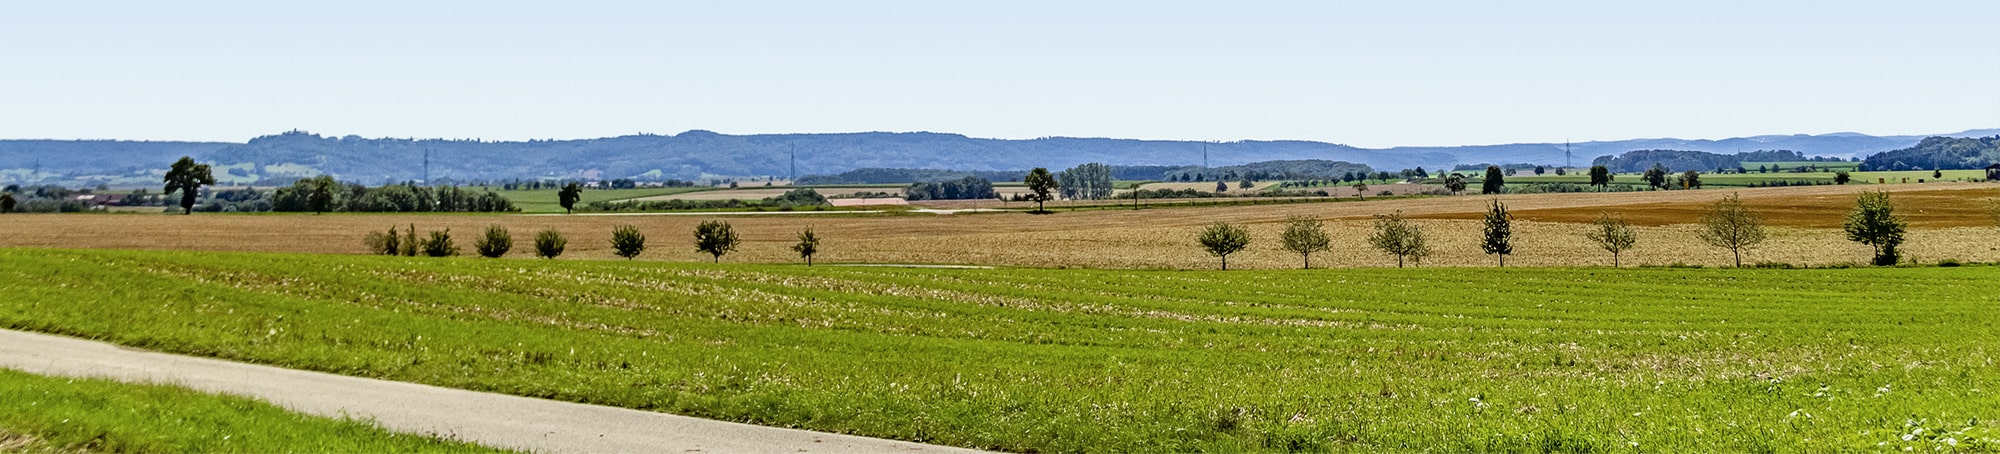 rural field